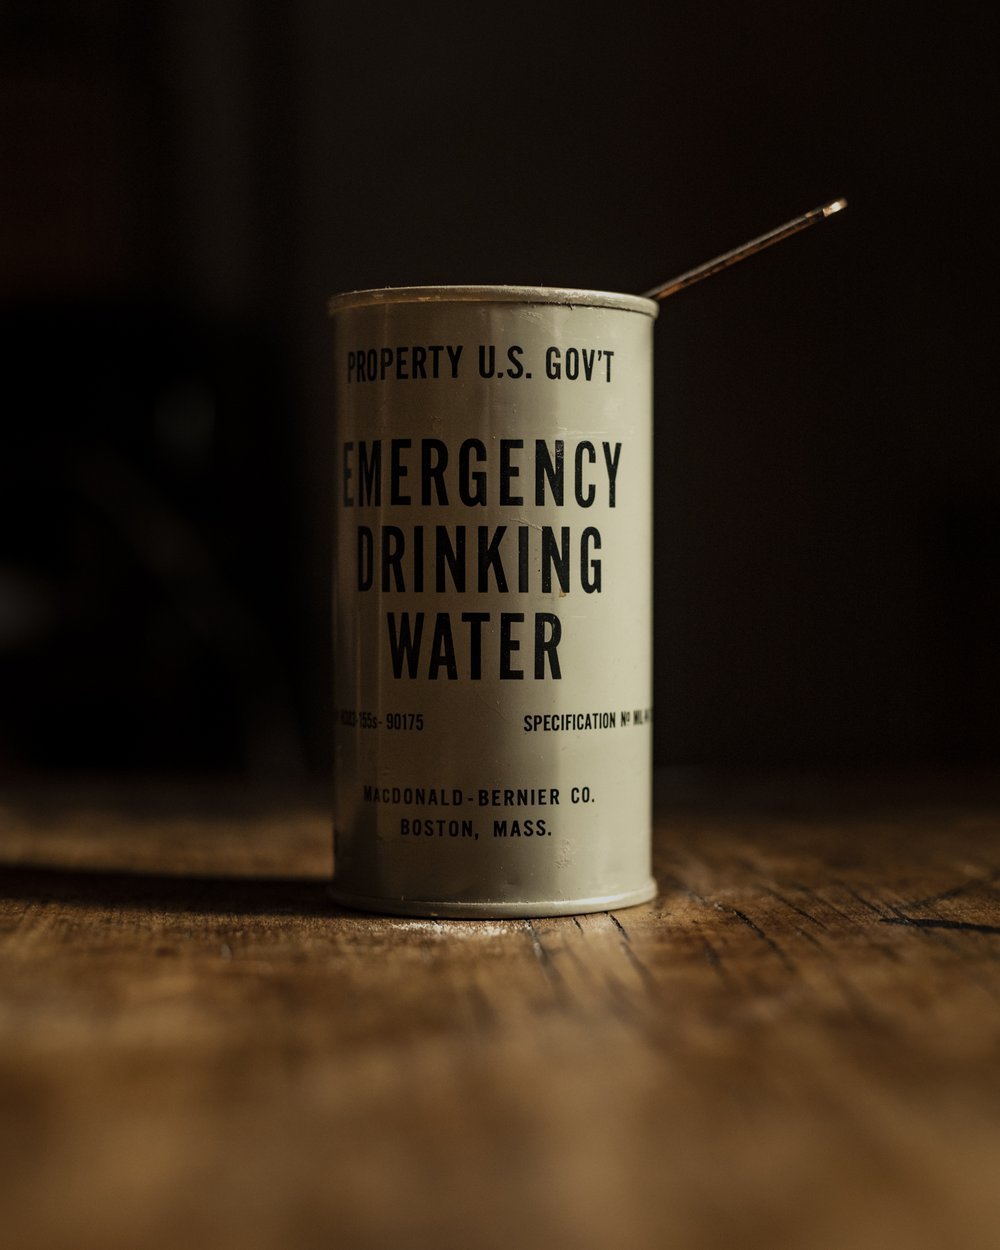 Emergency drinking water